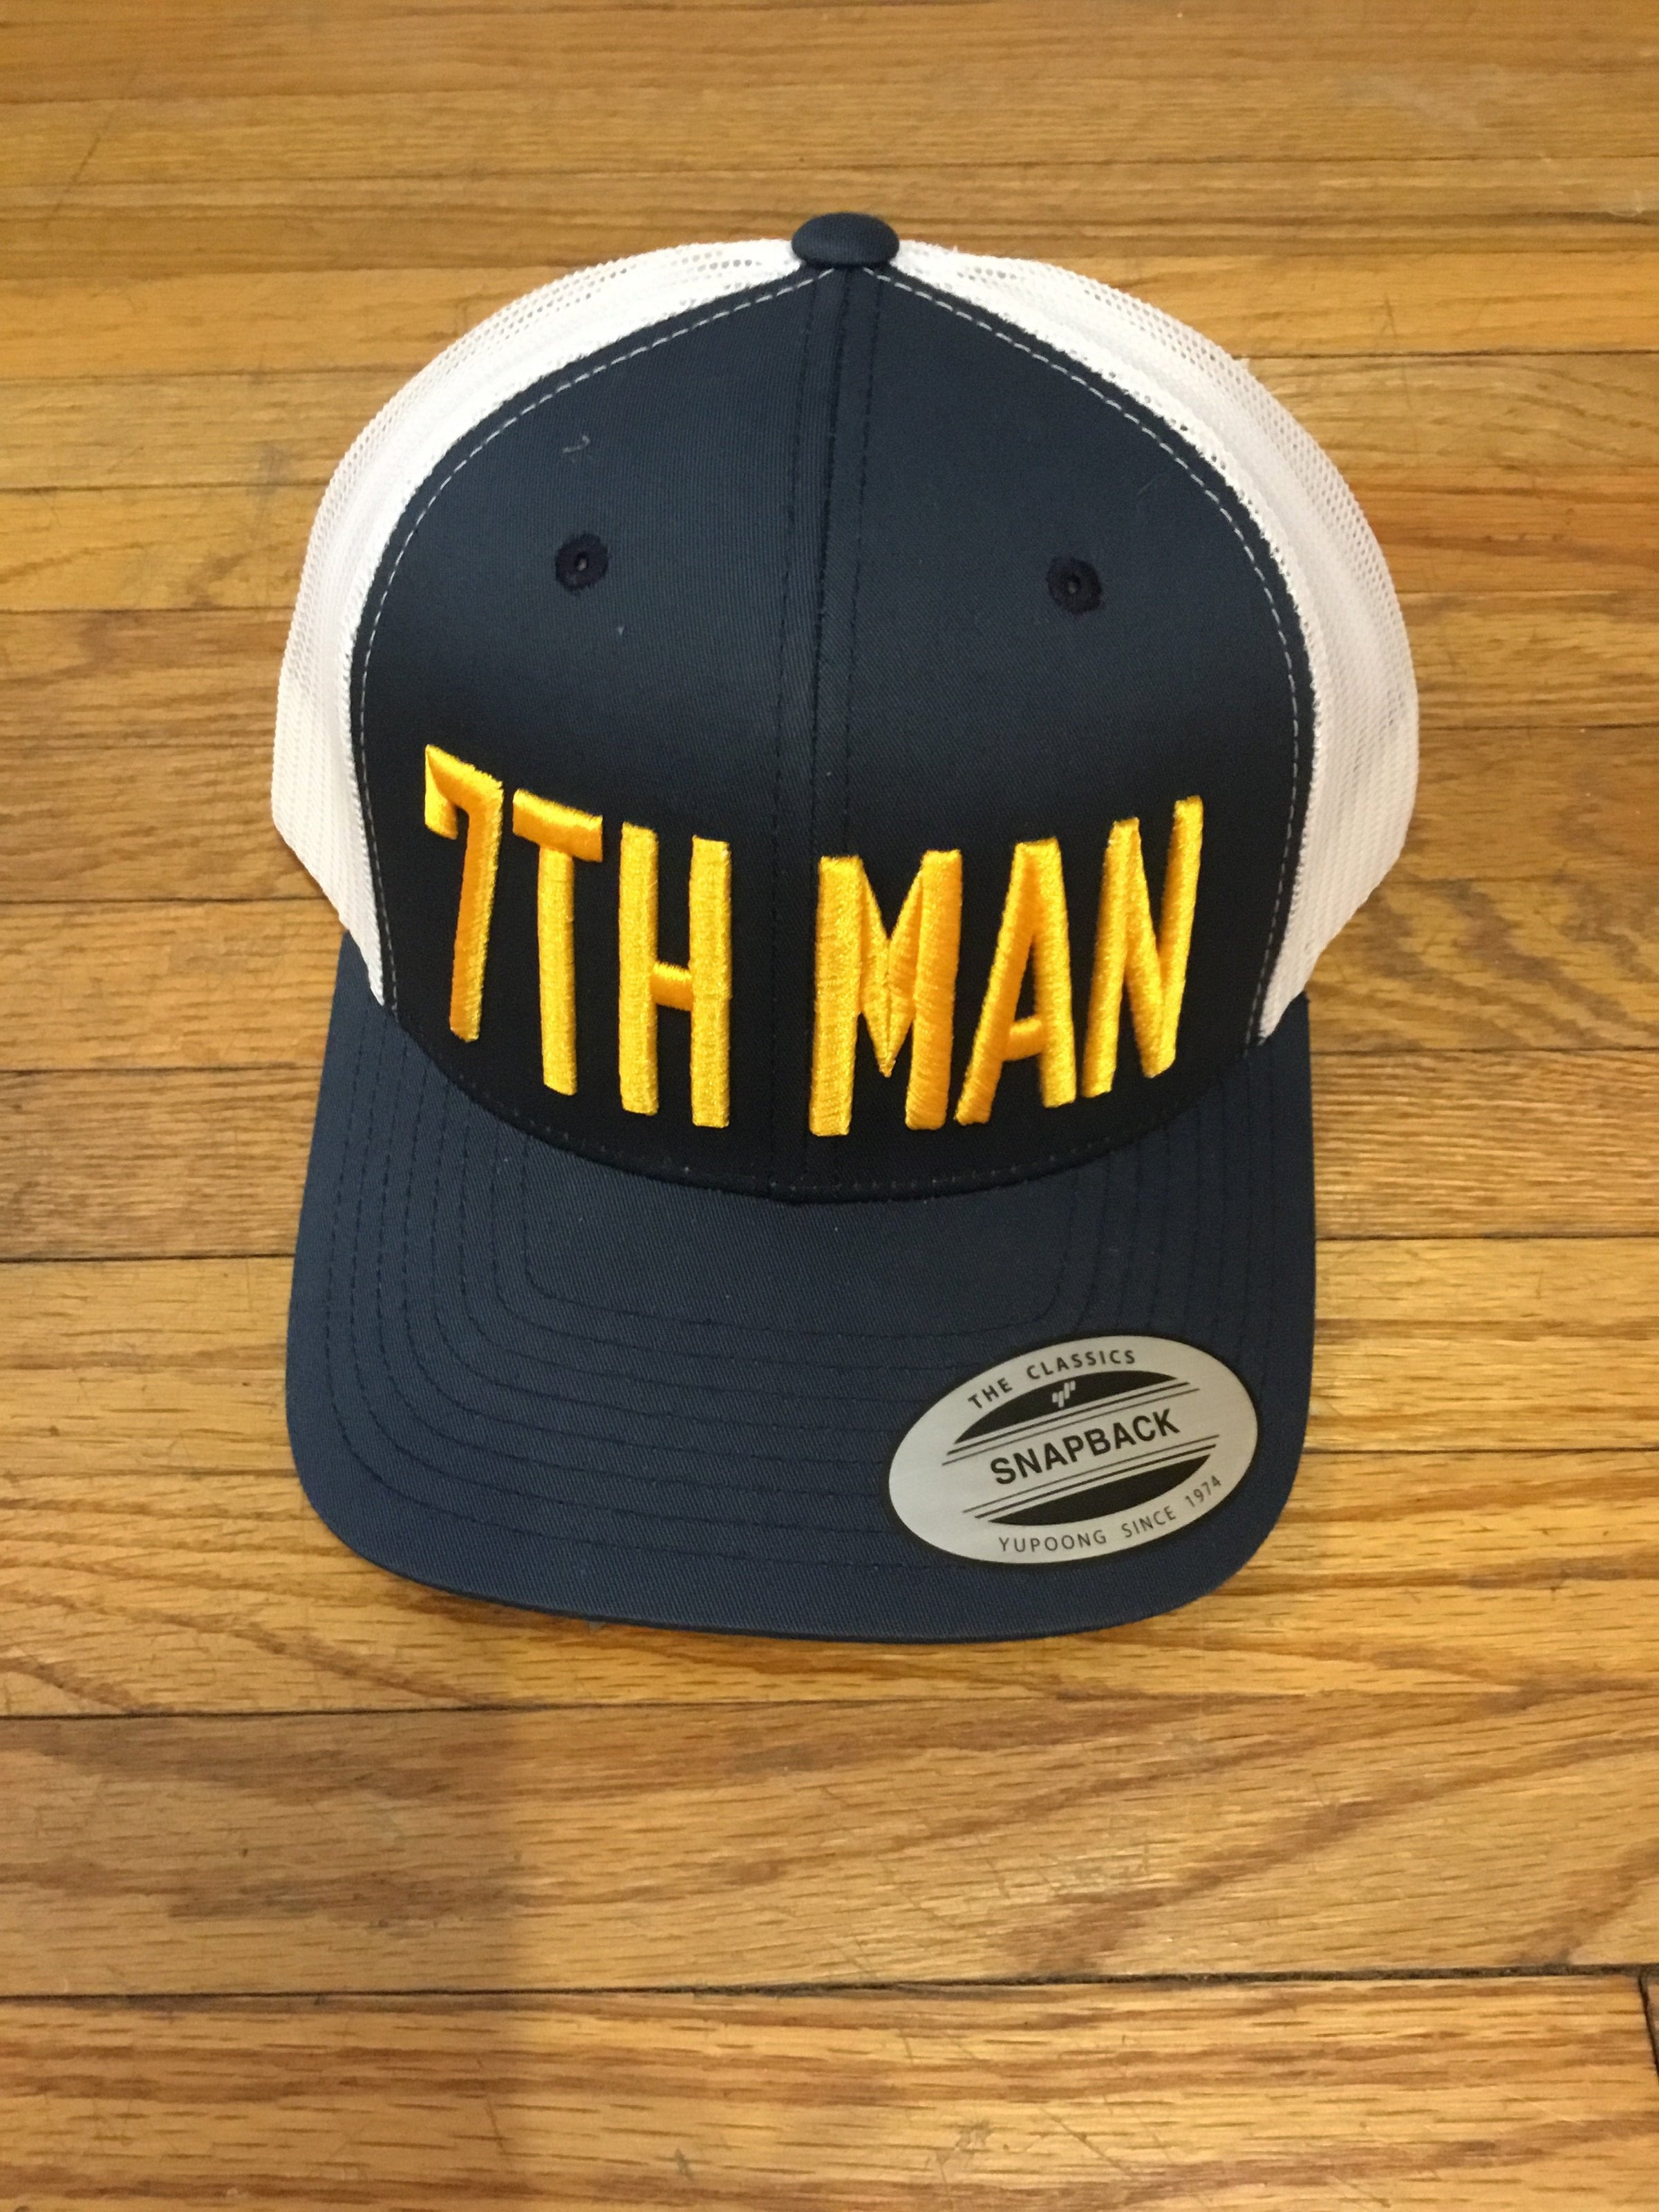 7th Man Hat Snapback - So Nashville Clothing